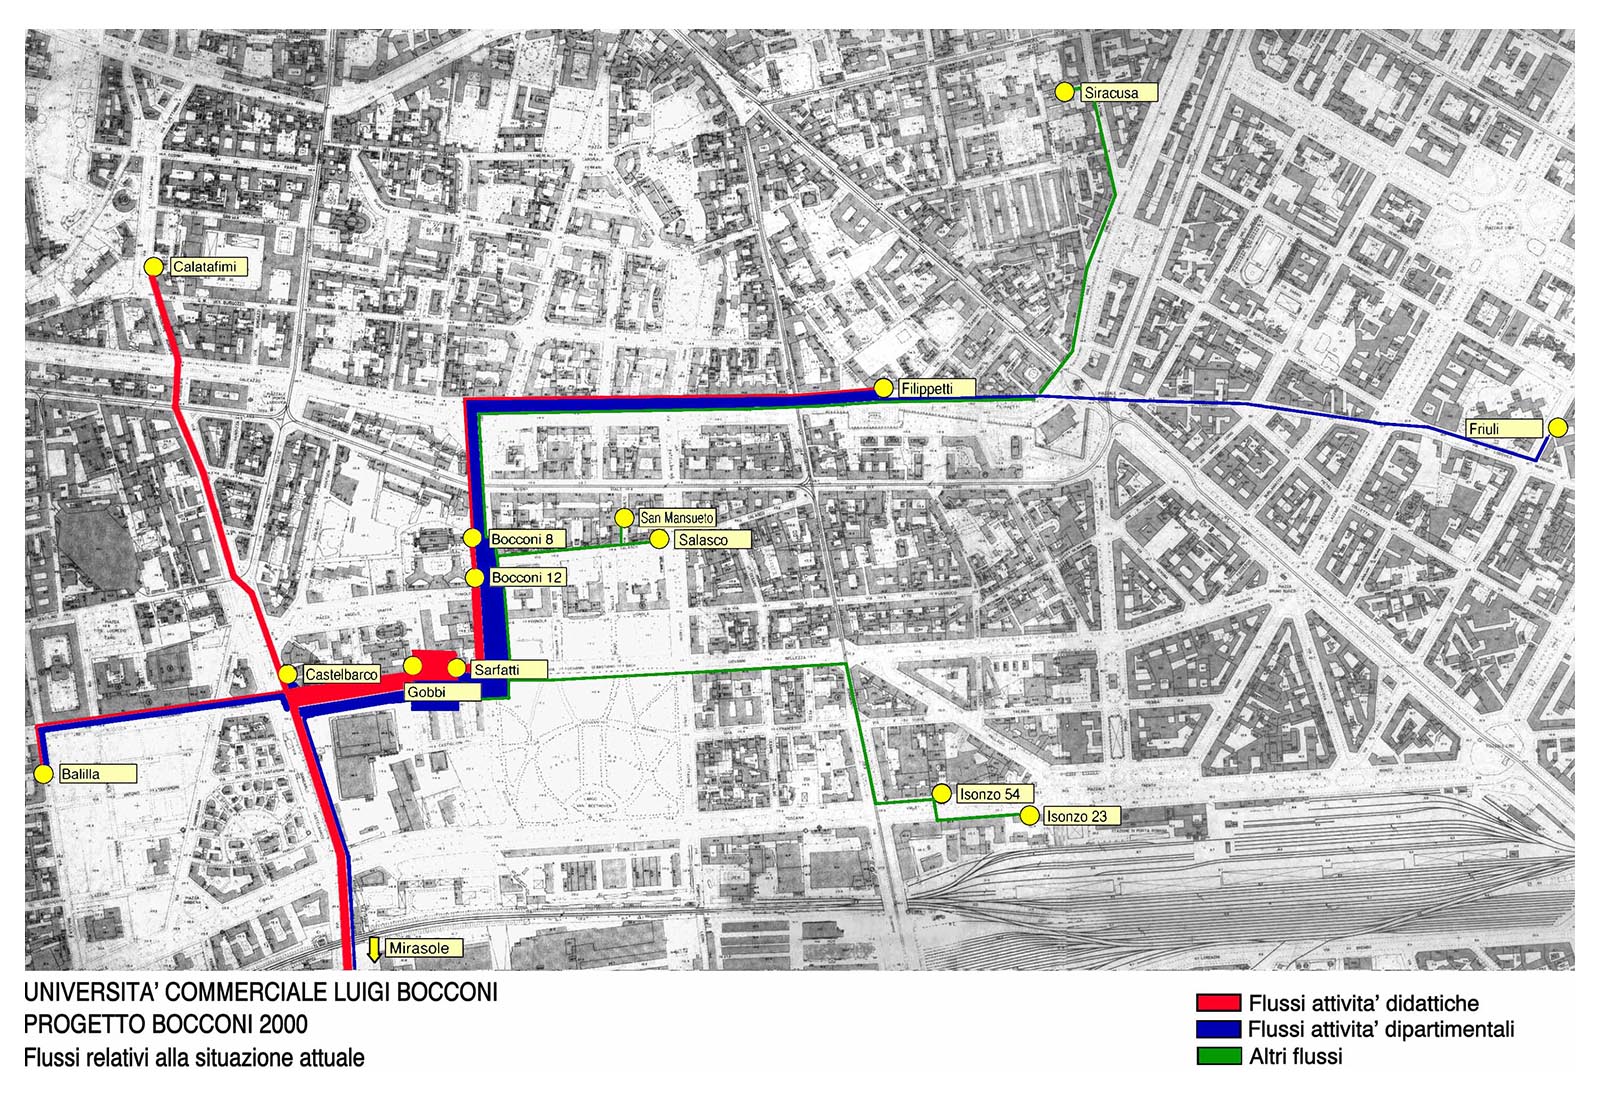 Bocconi university expansion impact - Flow analysis - previous situation